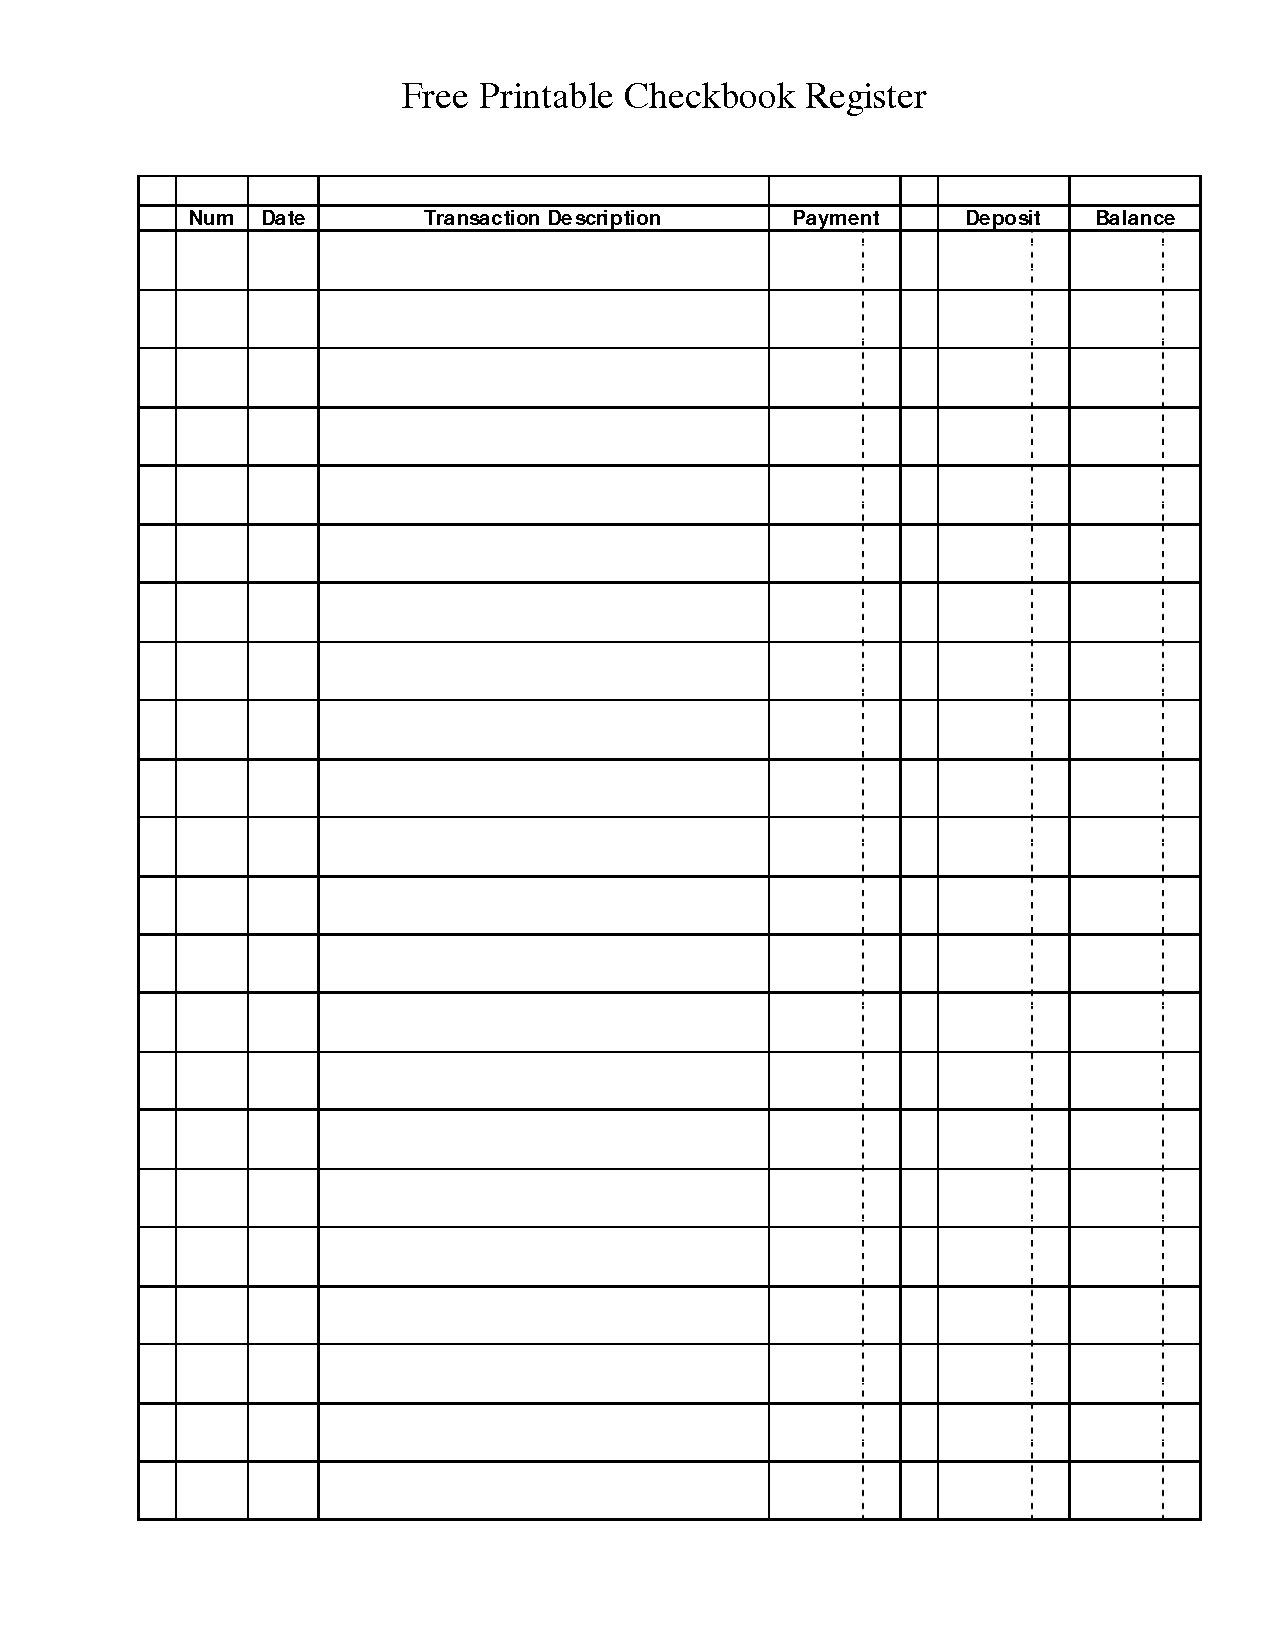 Free Printable Template Chores | Free Printable Check Register - Free Printable Blank Check Register Template